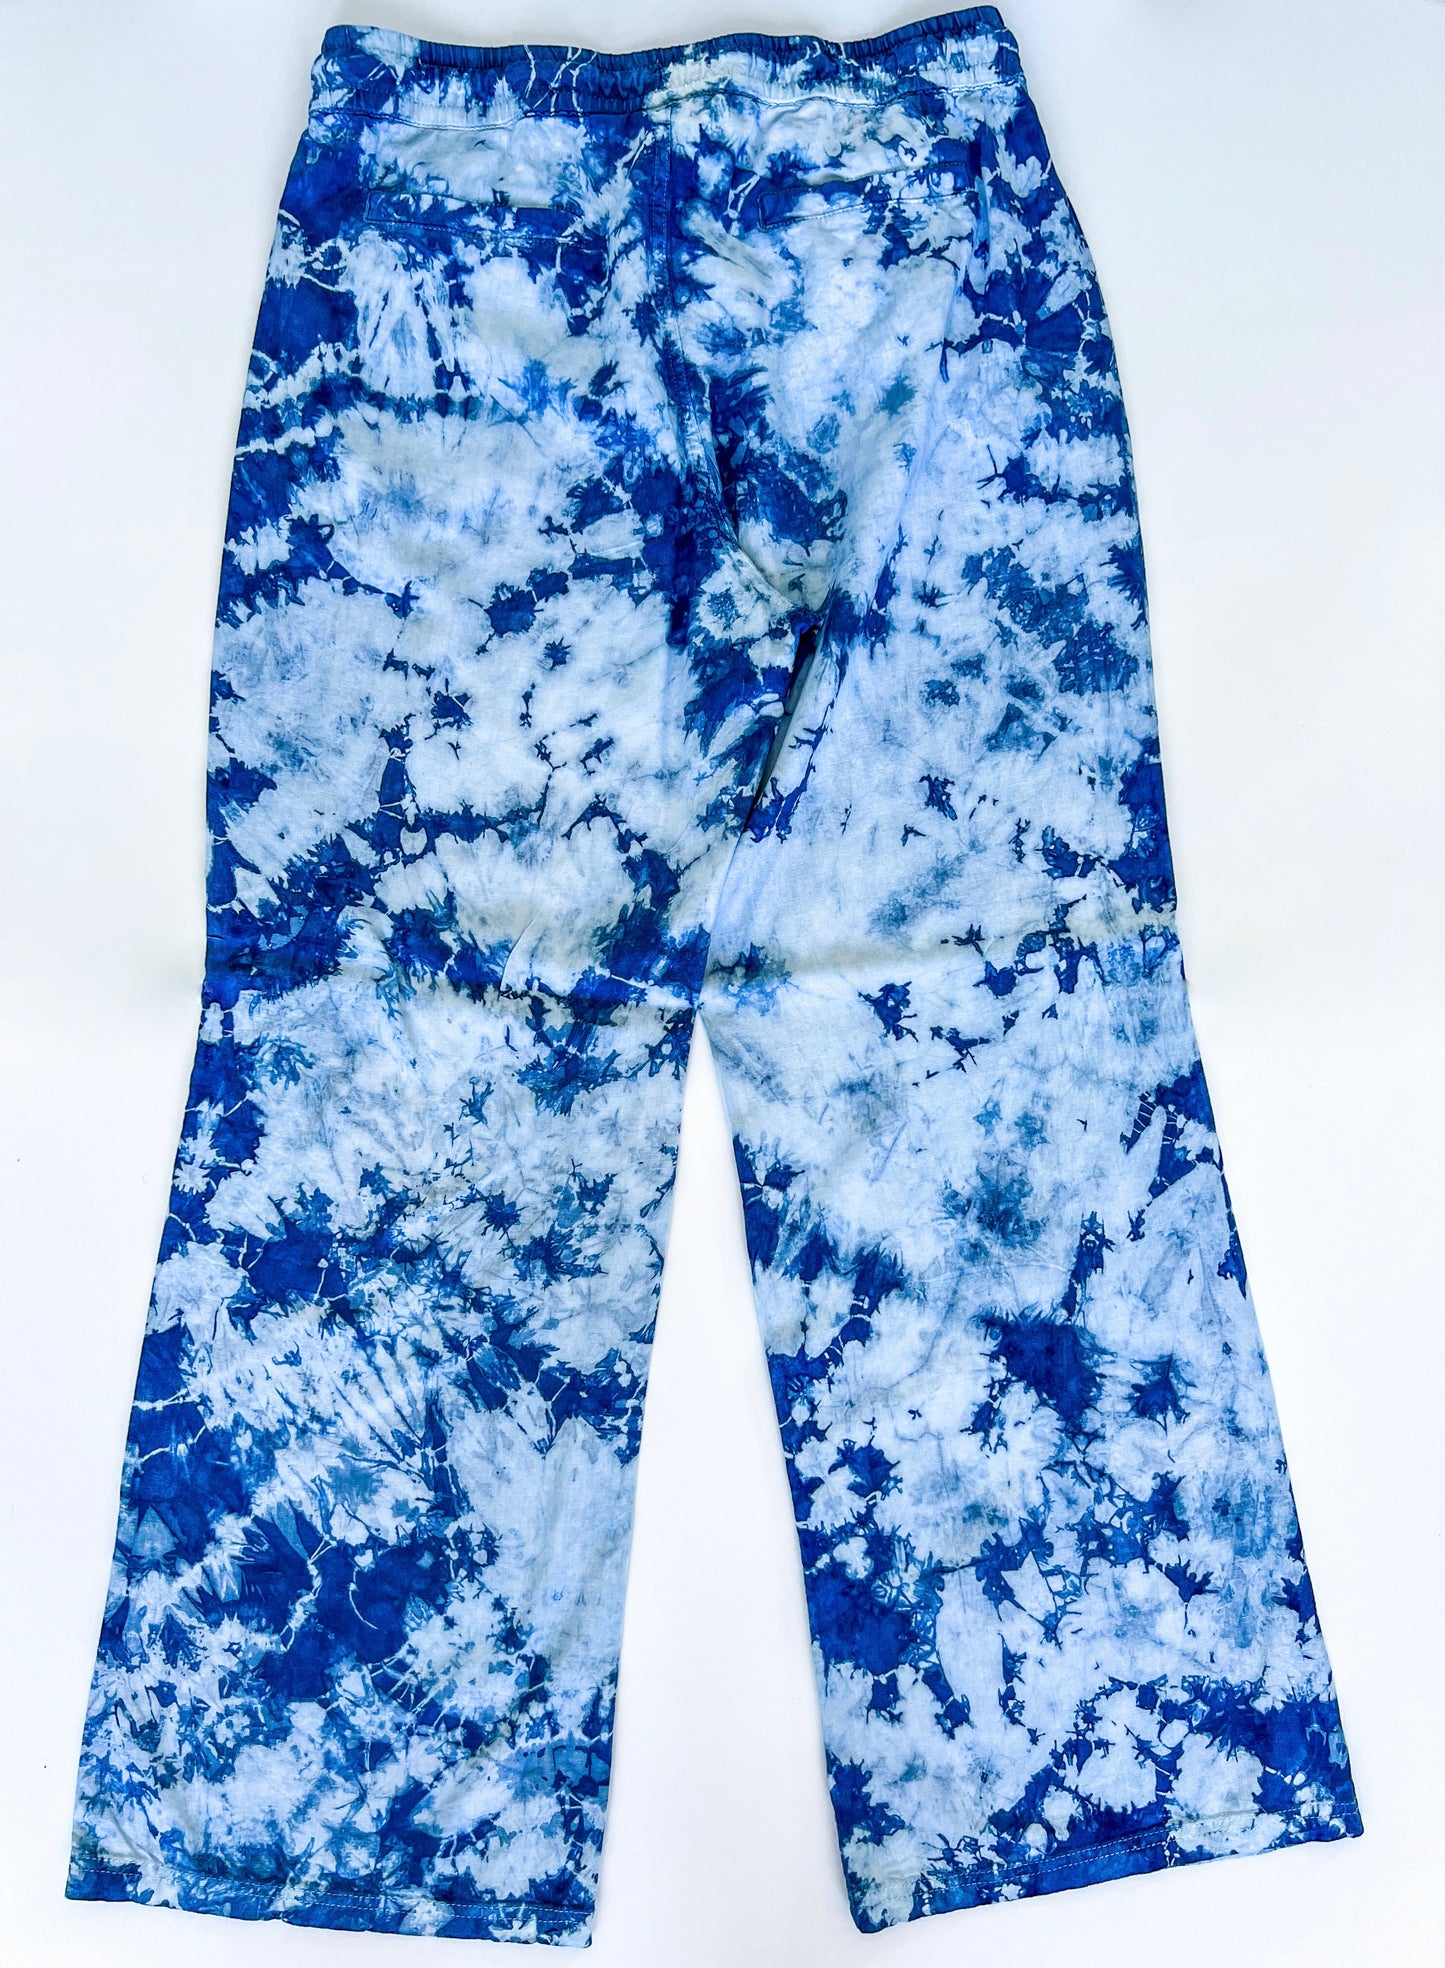 Indigo Dyed Linen Lounge Pants with Drawstring #2